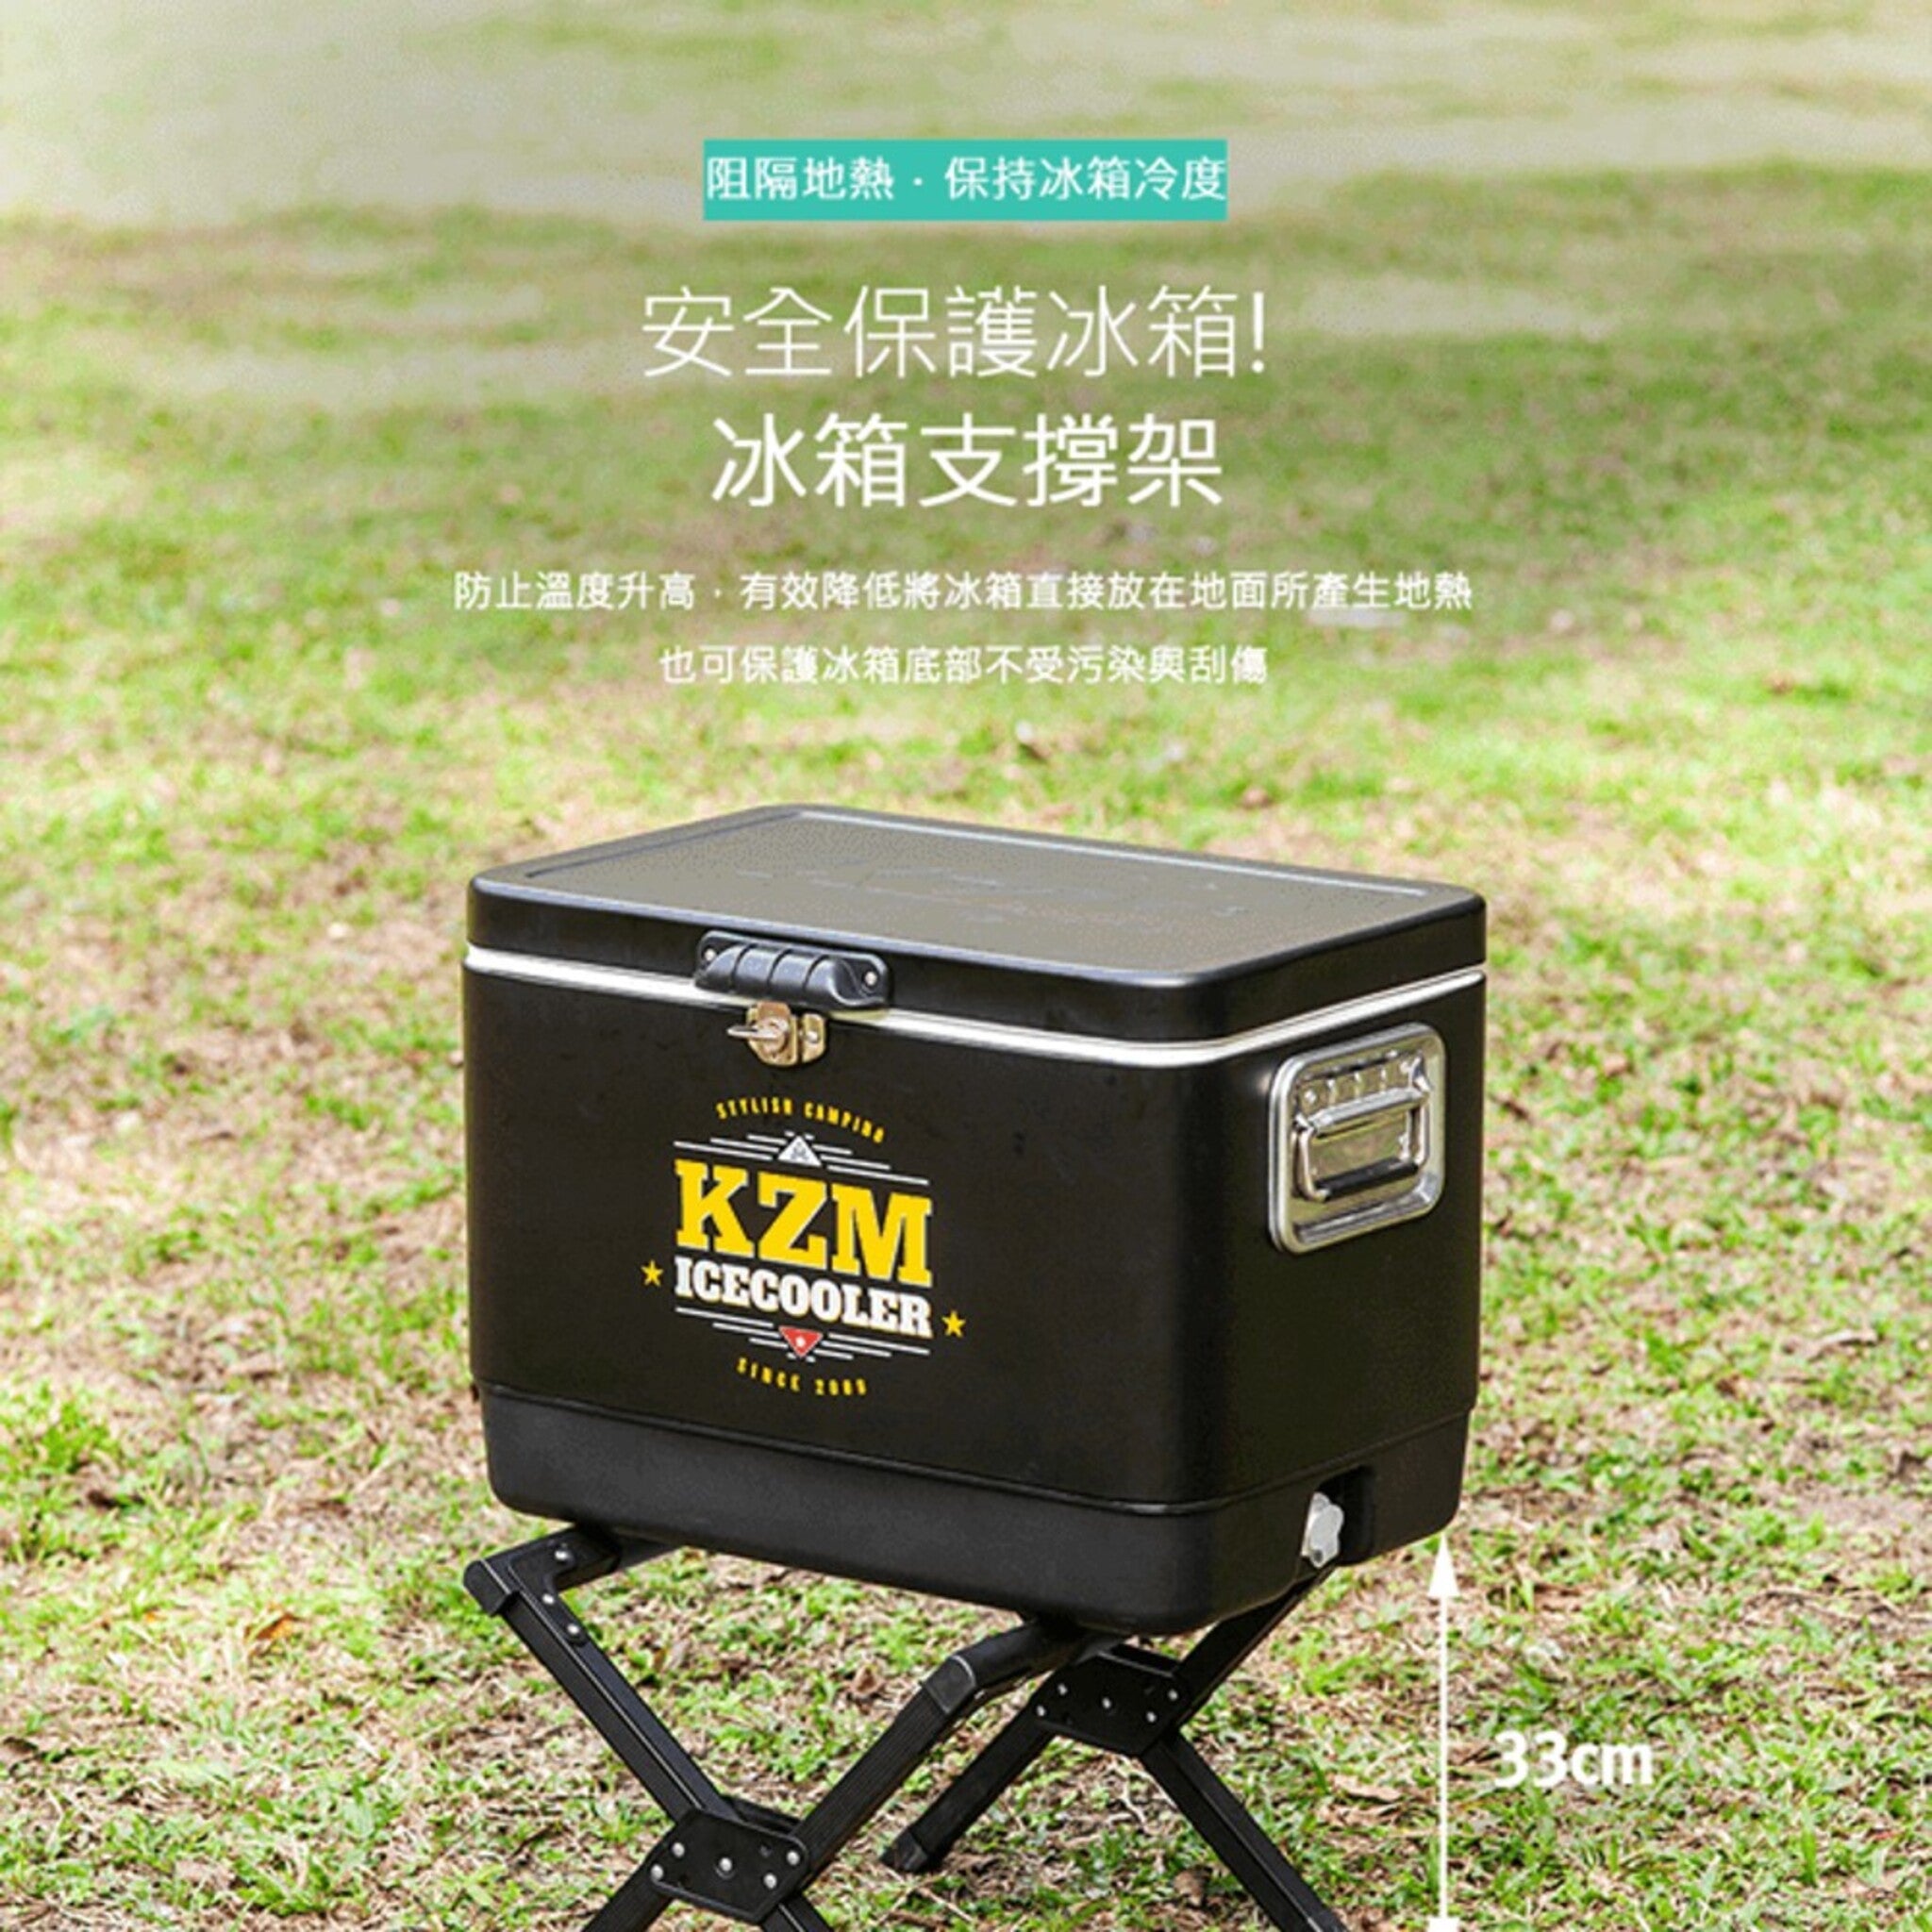 KAZMI KZM 冰箱架含收納袋 K20T3K006